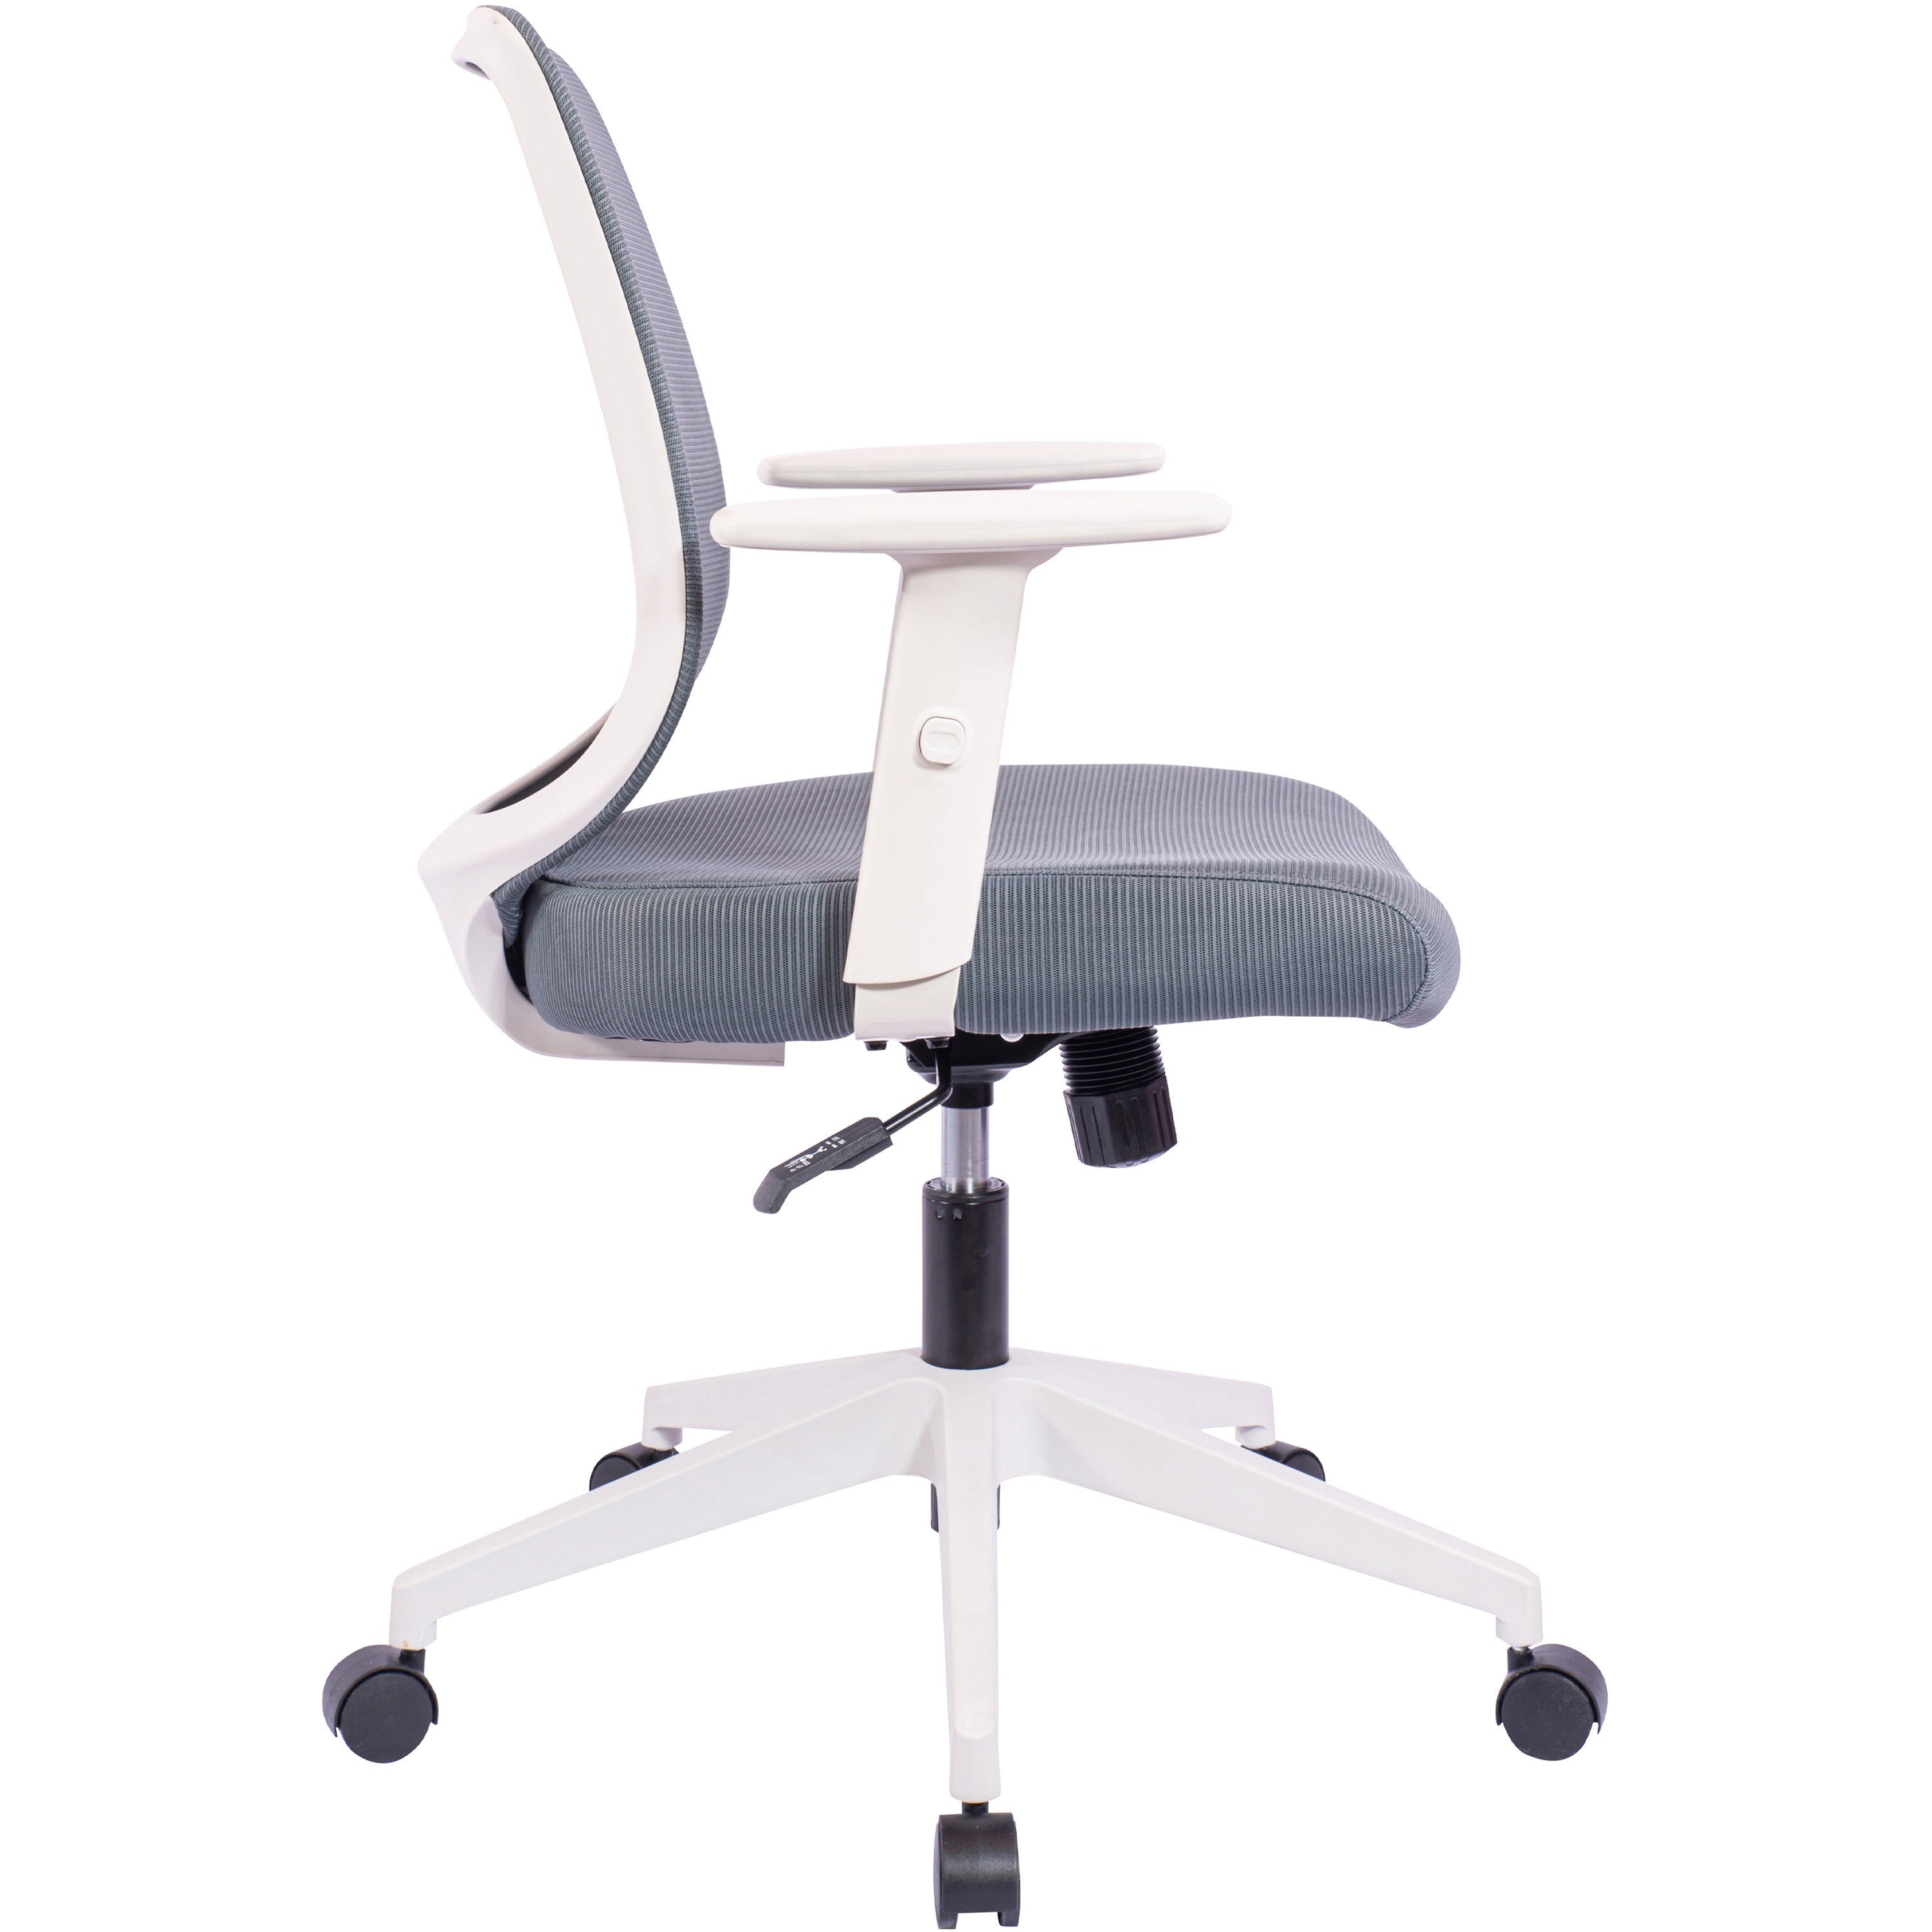 nusparc-mid-back-task-chair-fabric-back-mid-back-5-star-base-gray-armrest-1-each_nprch201magy - 6